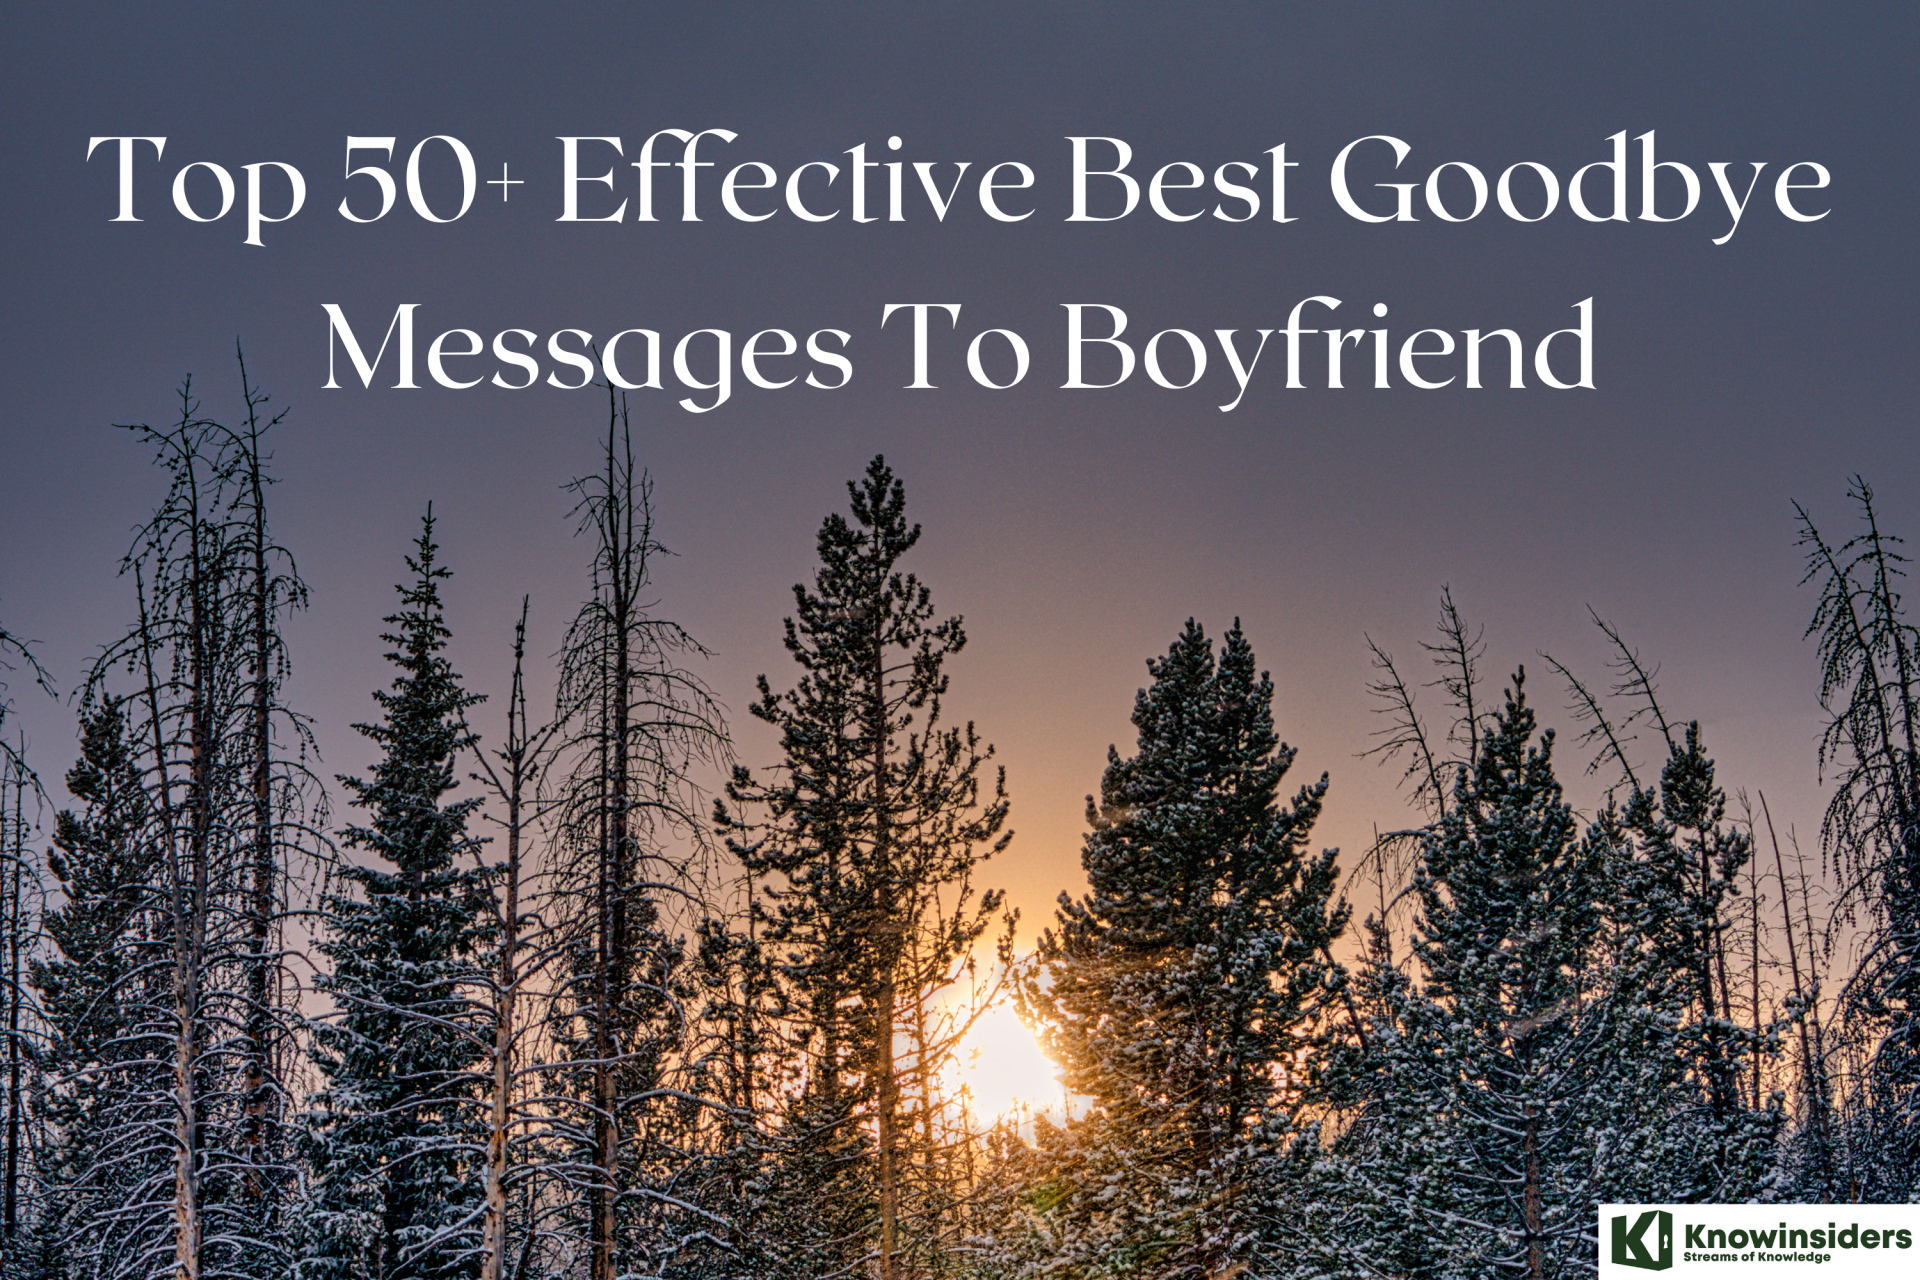 Top 50+ Effective Best Goodbye Messages To Boyfriend